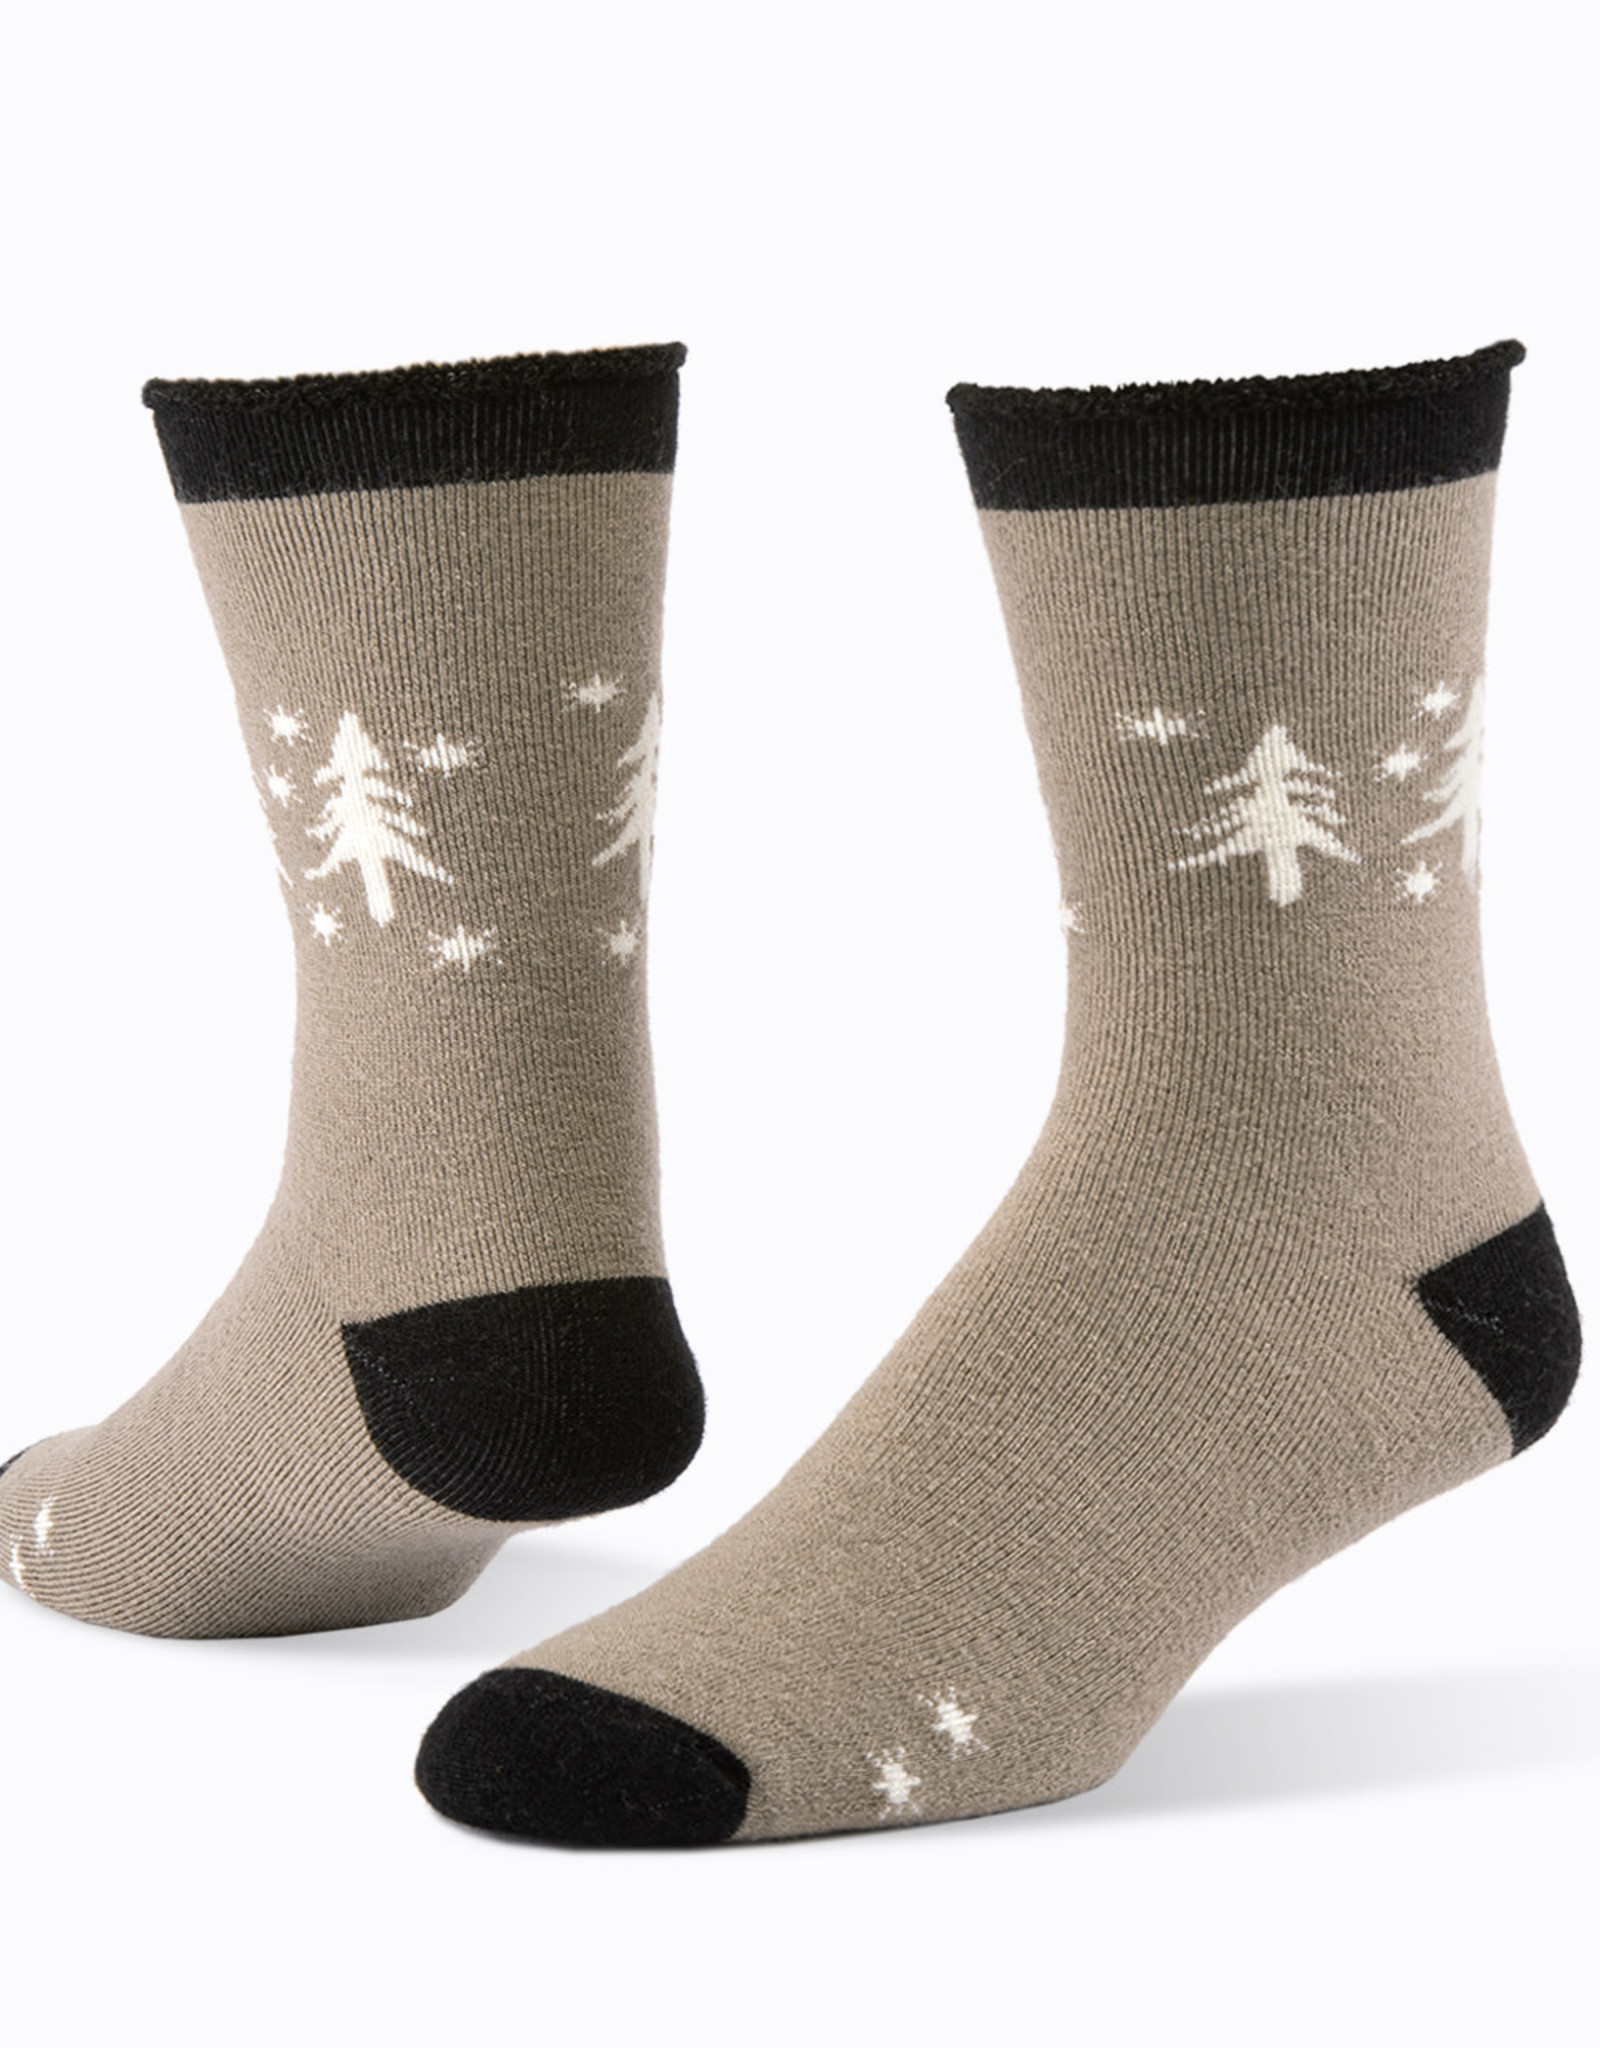 Maggie's Organics Wool Snuggle Socks (Forest Taupe)